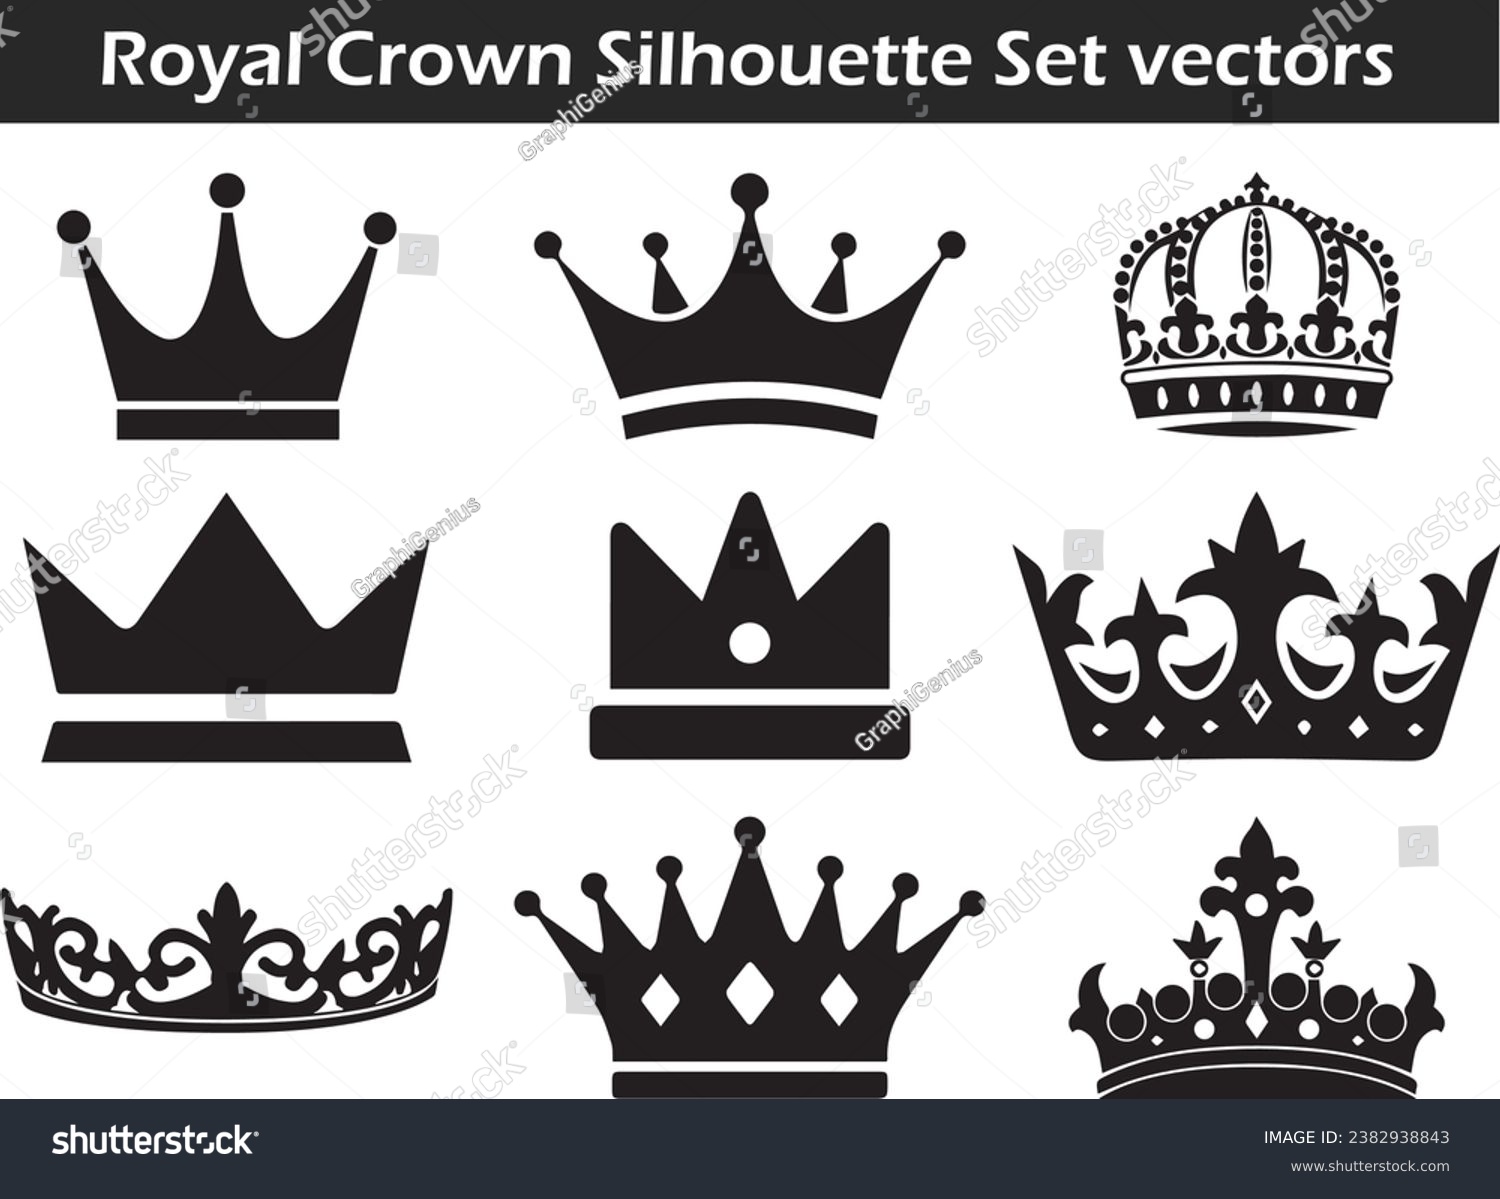 SVG of Royal Crown Silhouette Set vectors svg